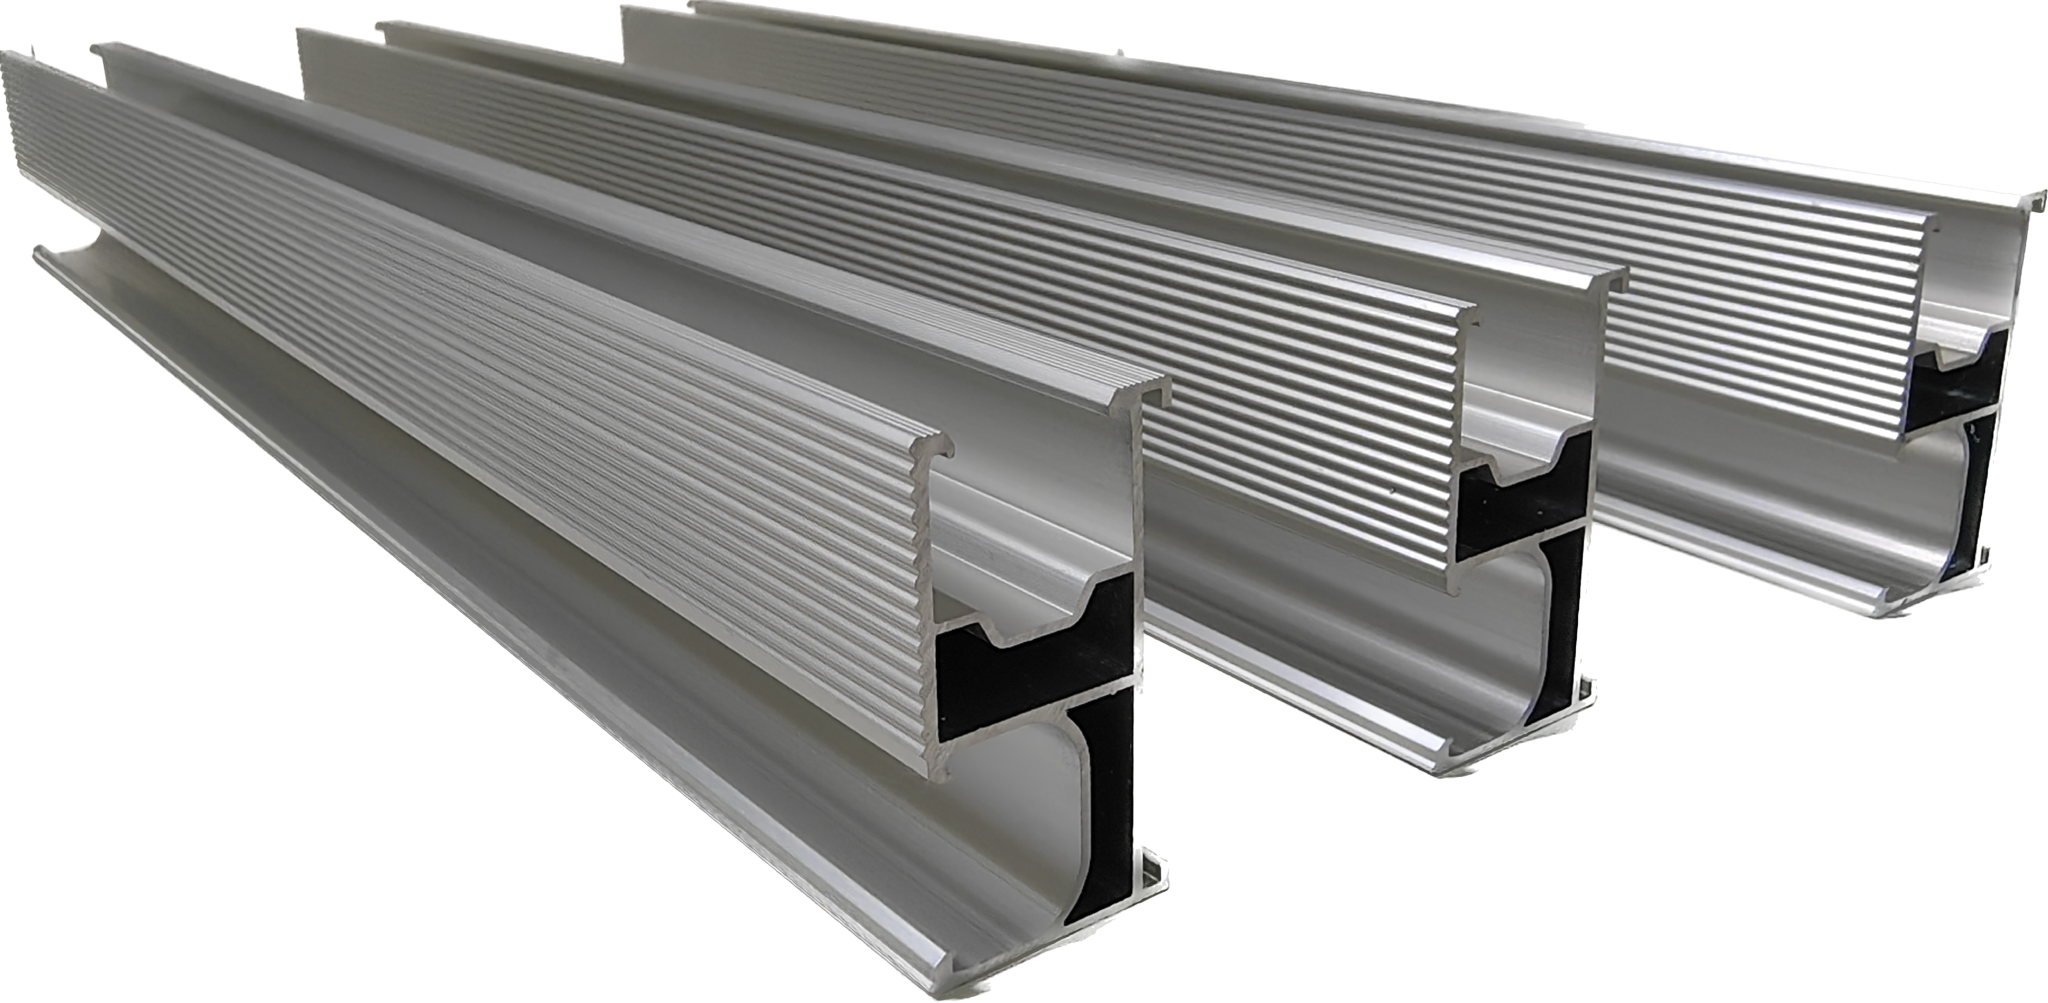 Aluminum alloy guide rail